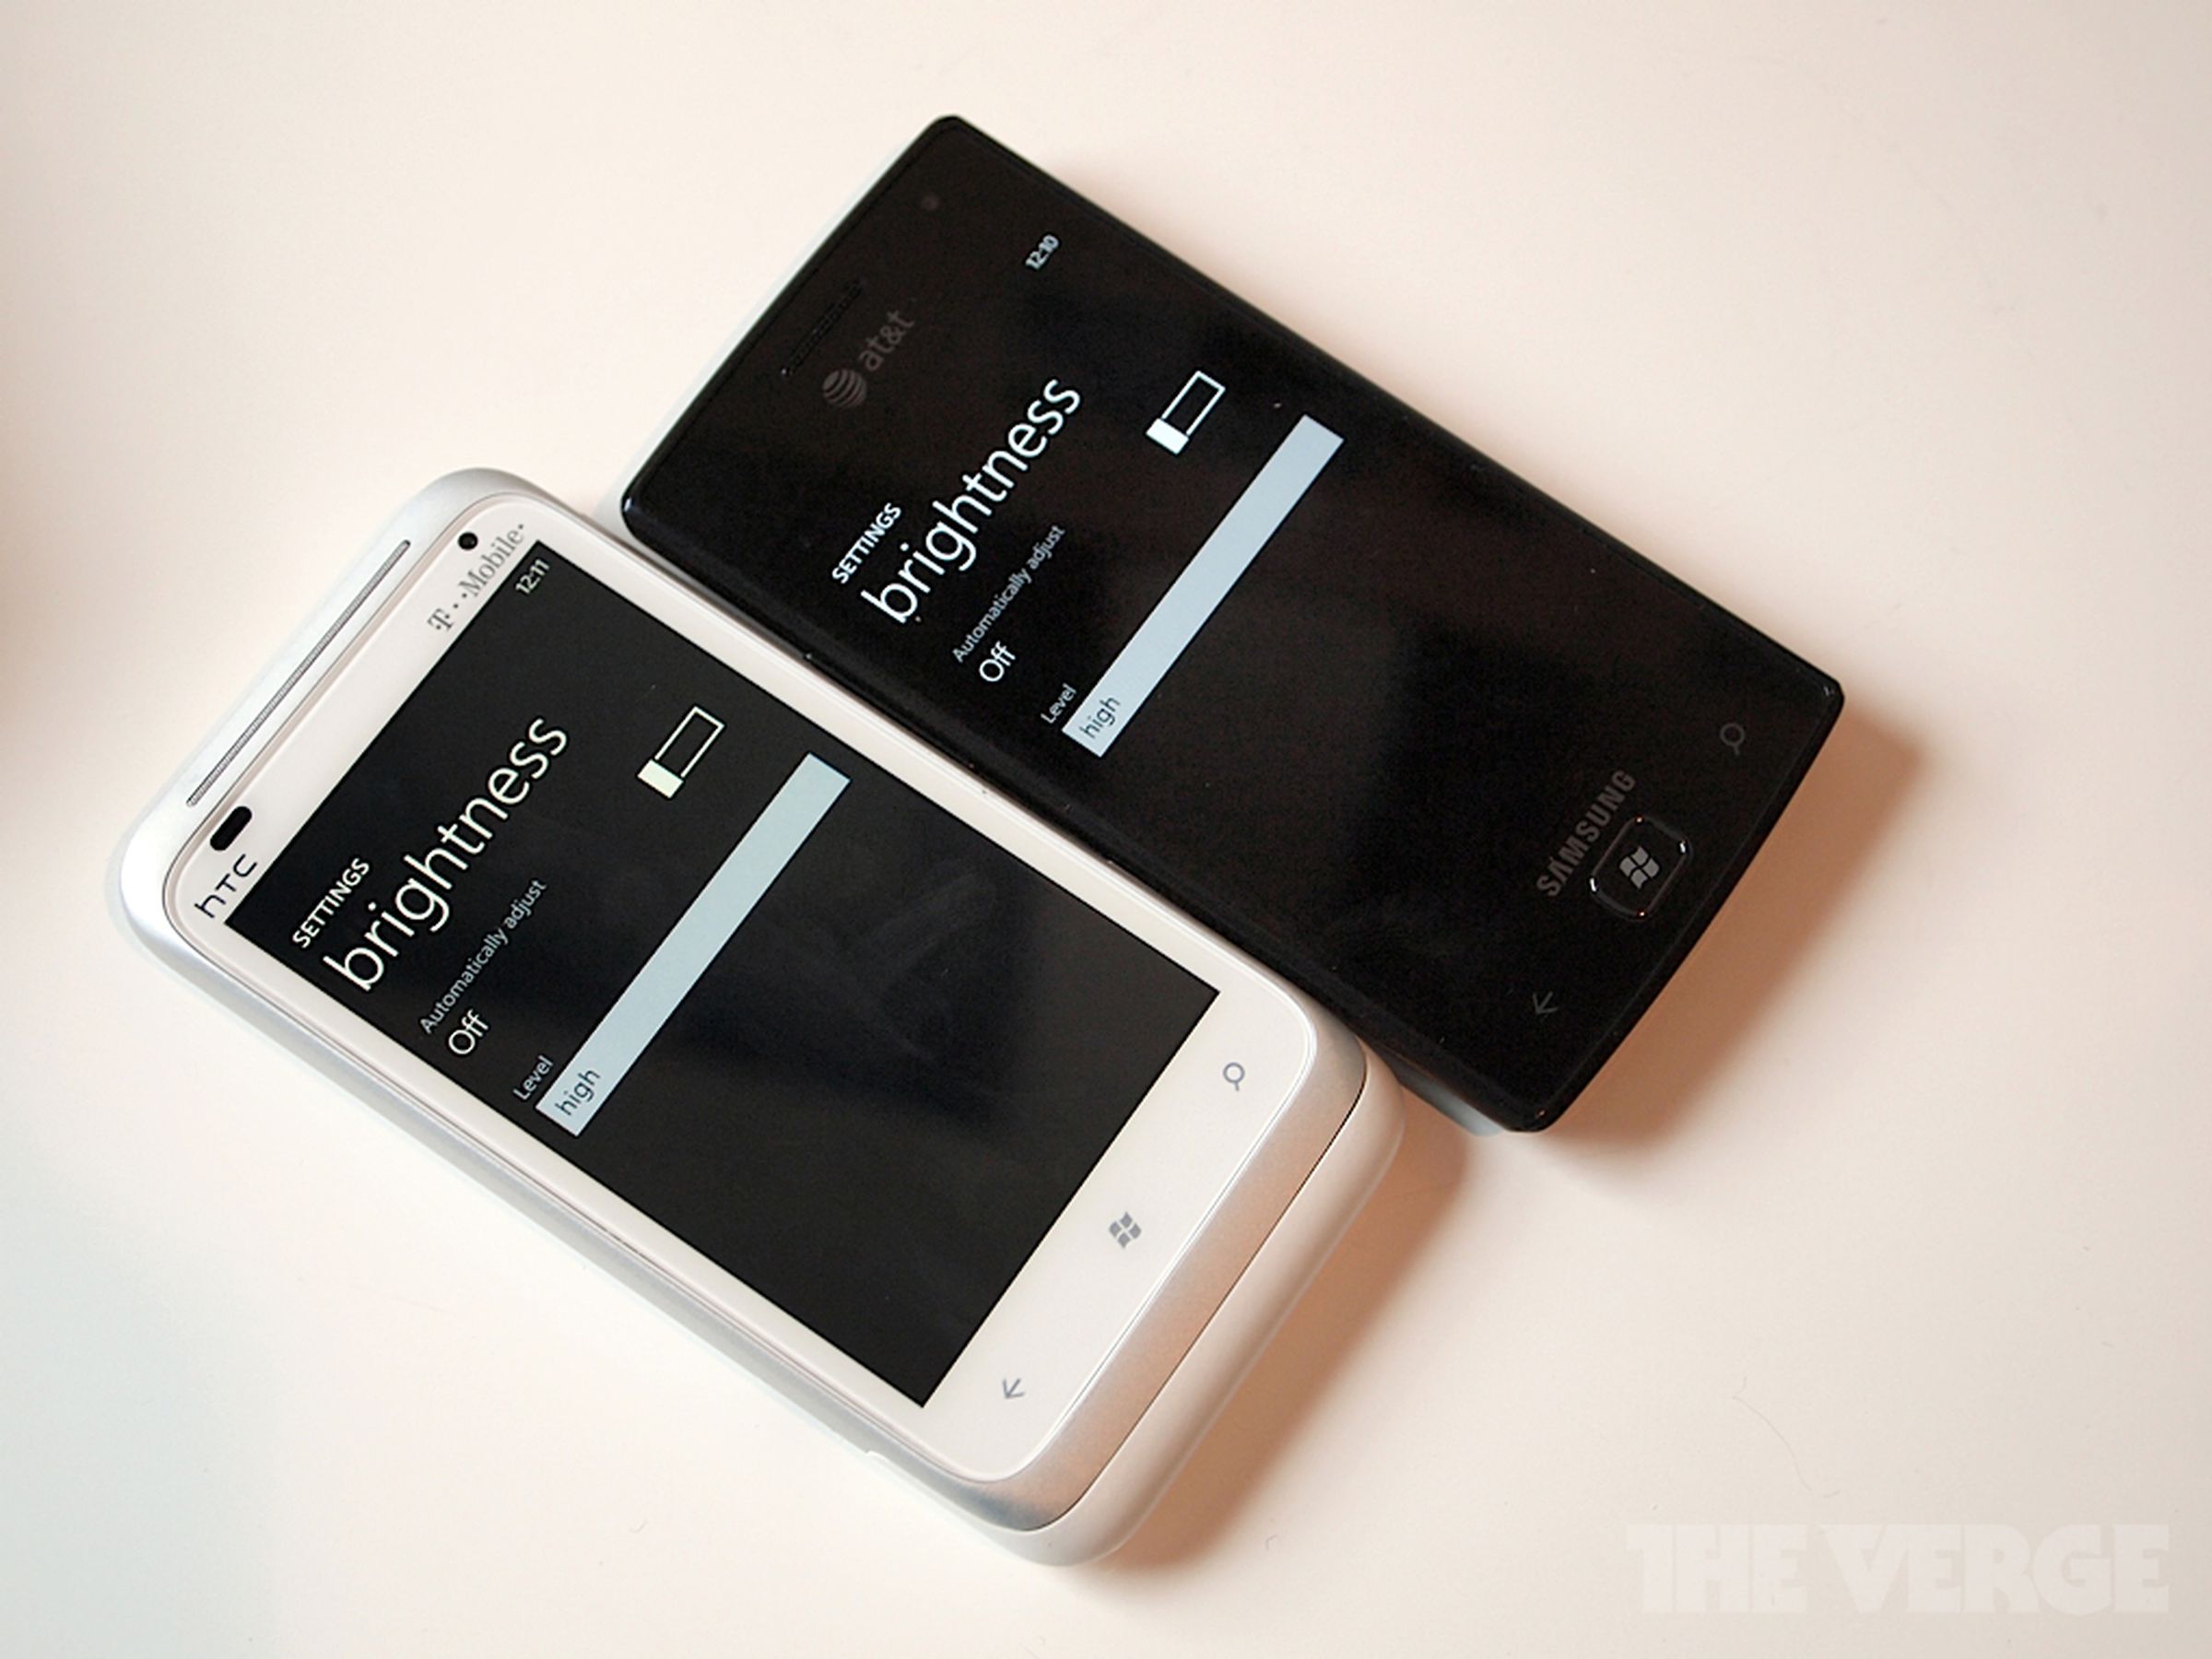 HTC Radar 4G vs. Samsung Focus Flash